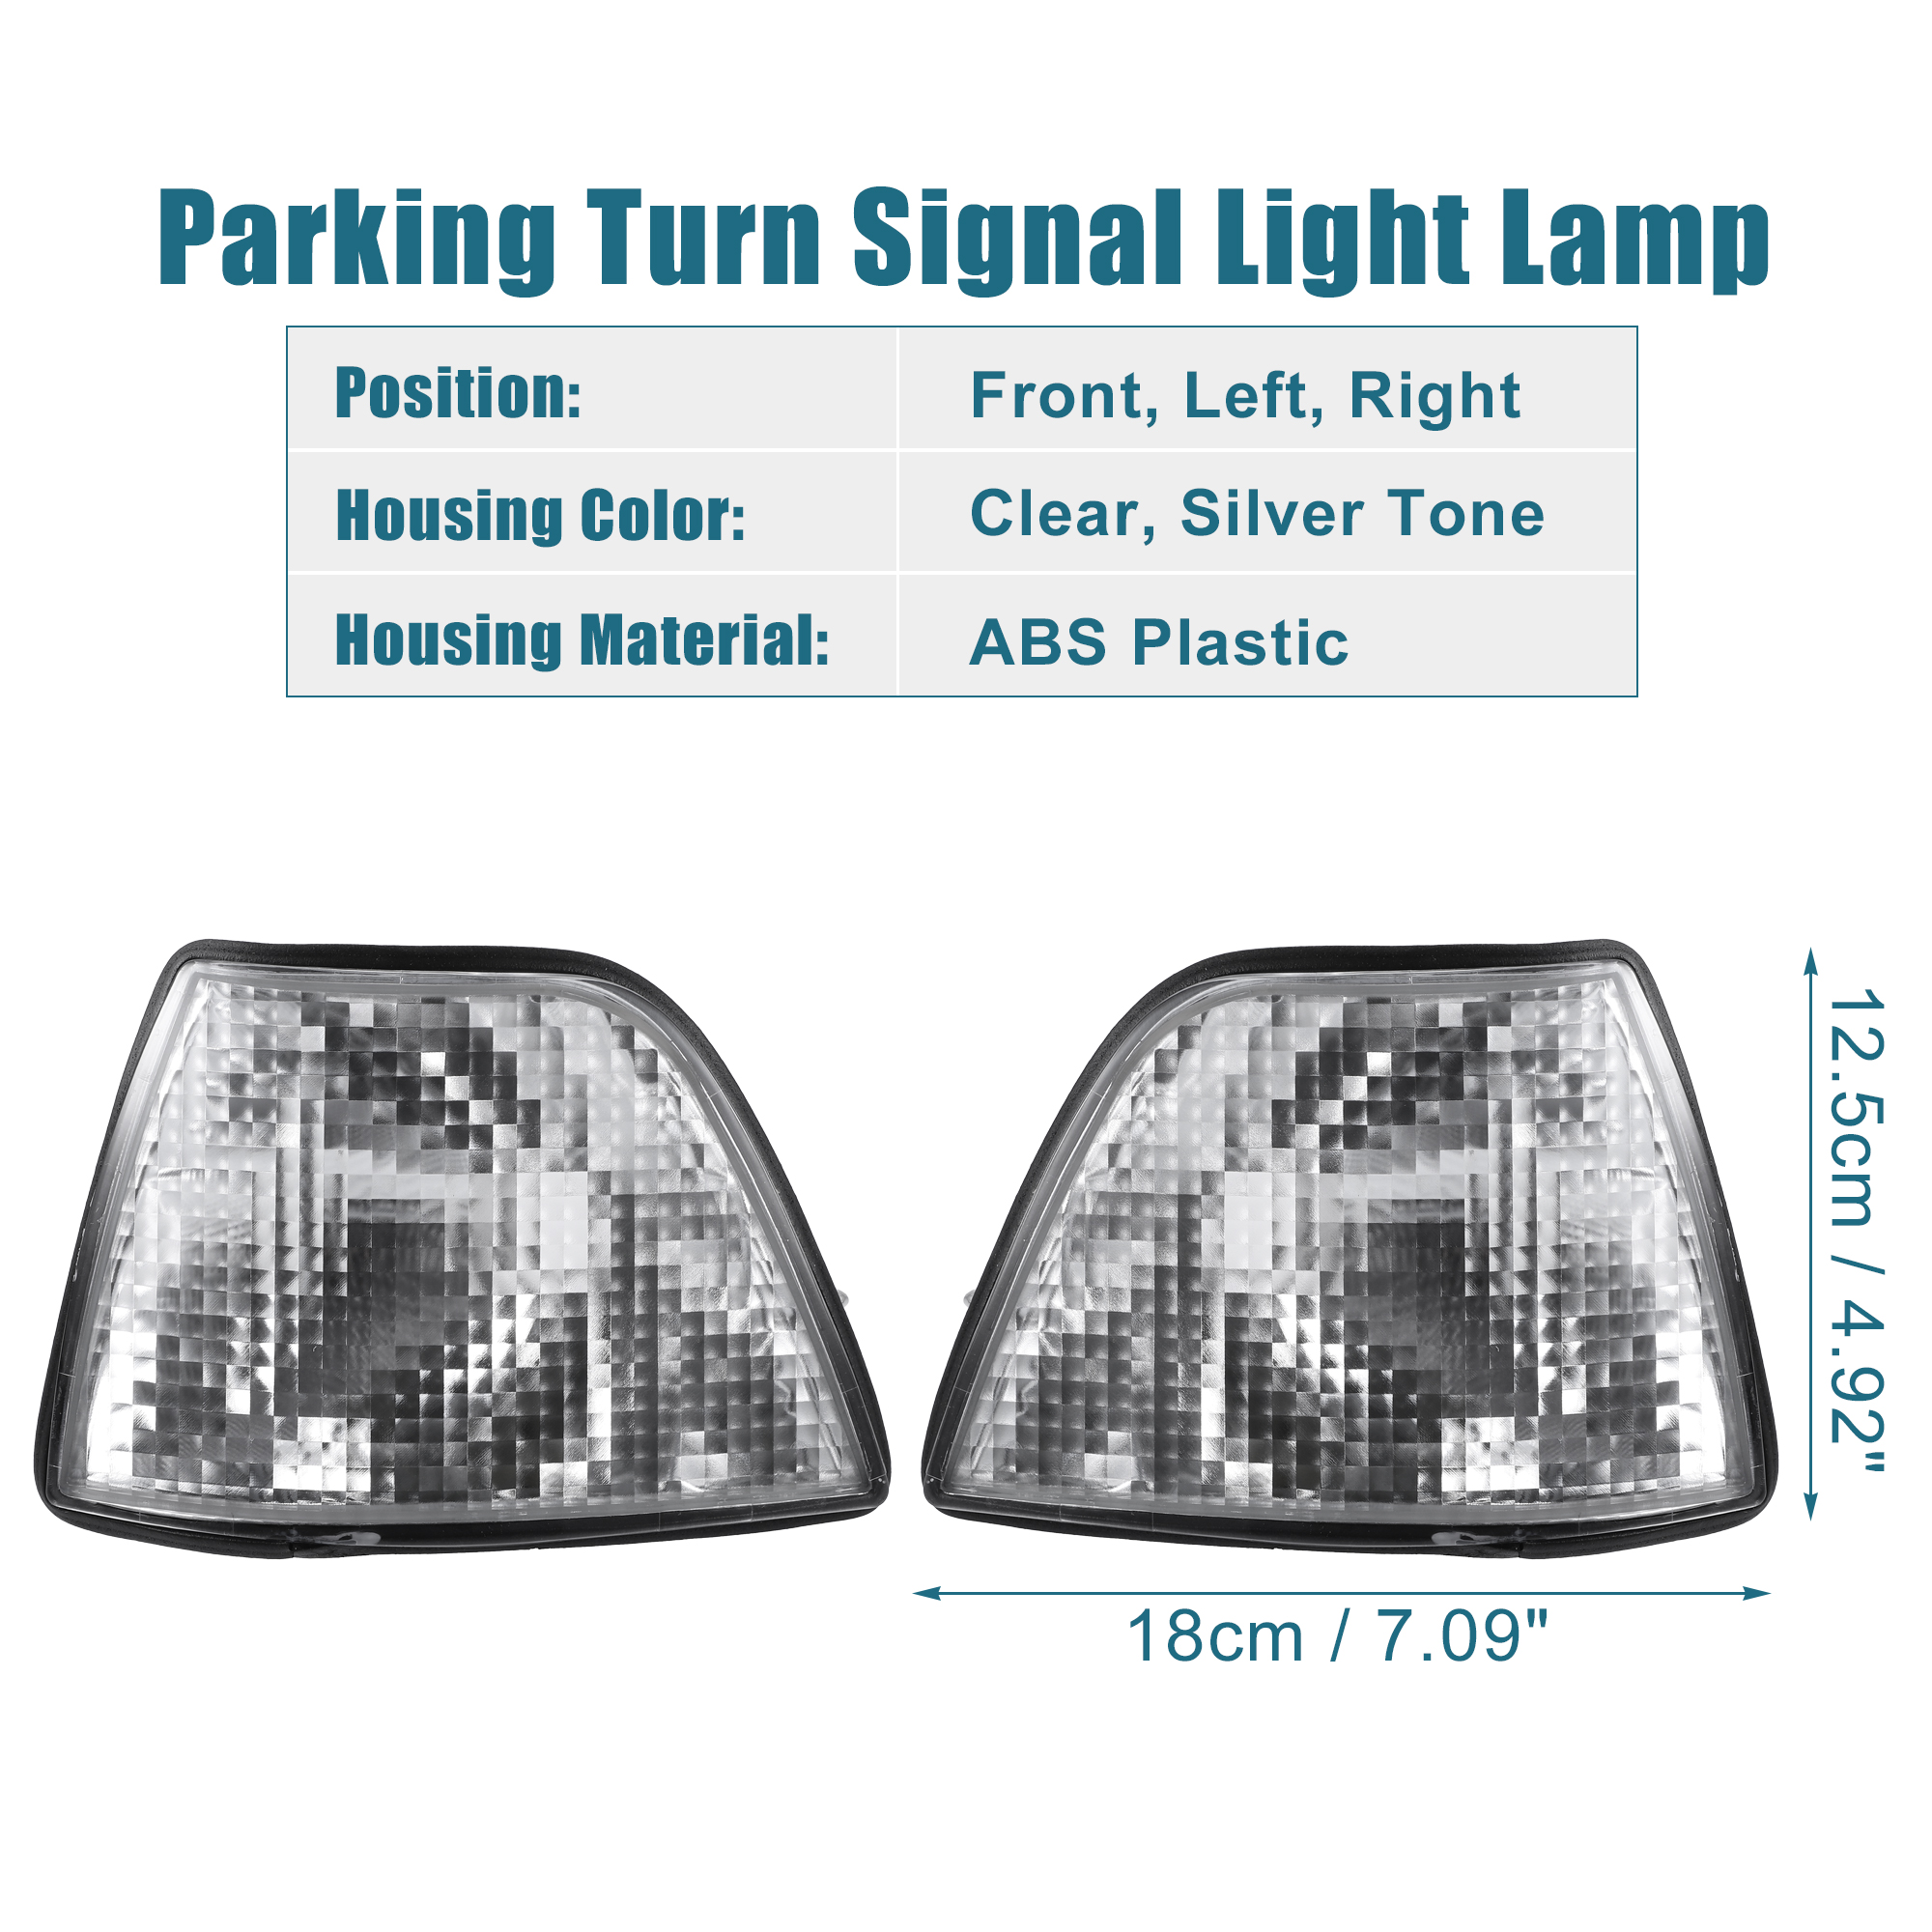 Unique Bargains Pair Clear Turn Signal Light Lamp Corner Signal Light for BMW E36 3 Series 92-98